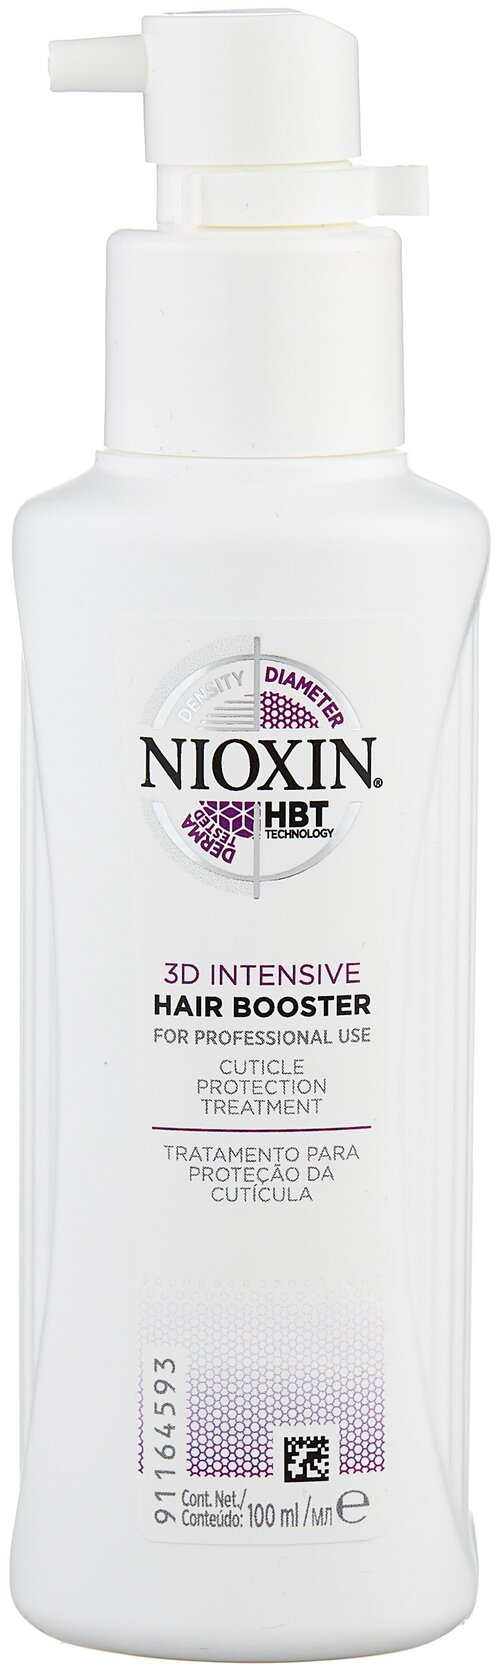 Nioxin Intensive Treatment Усилитель роста волос, 150 г, 100 мл, бутылка